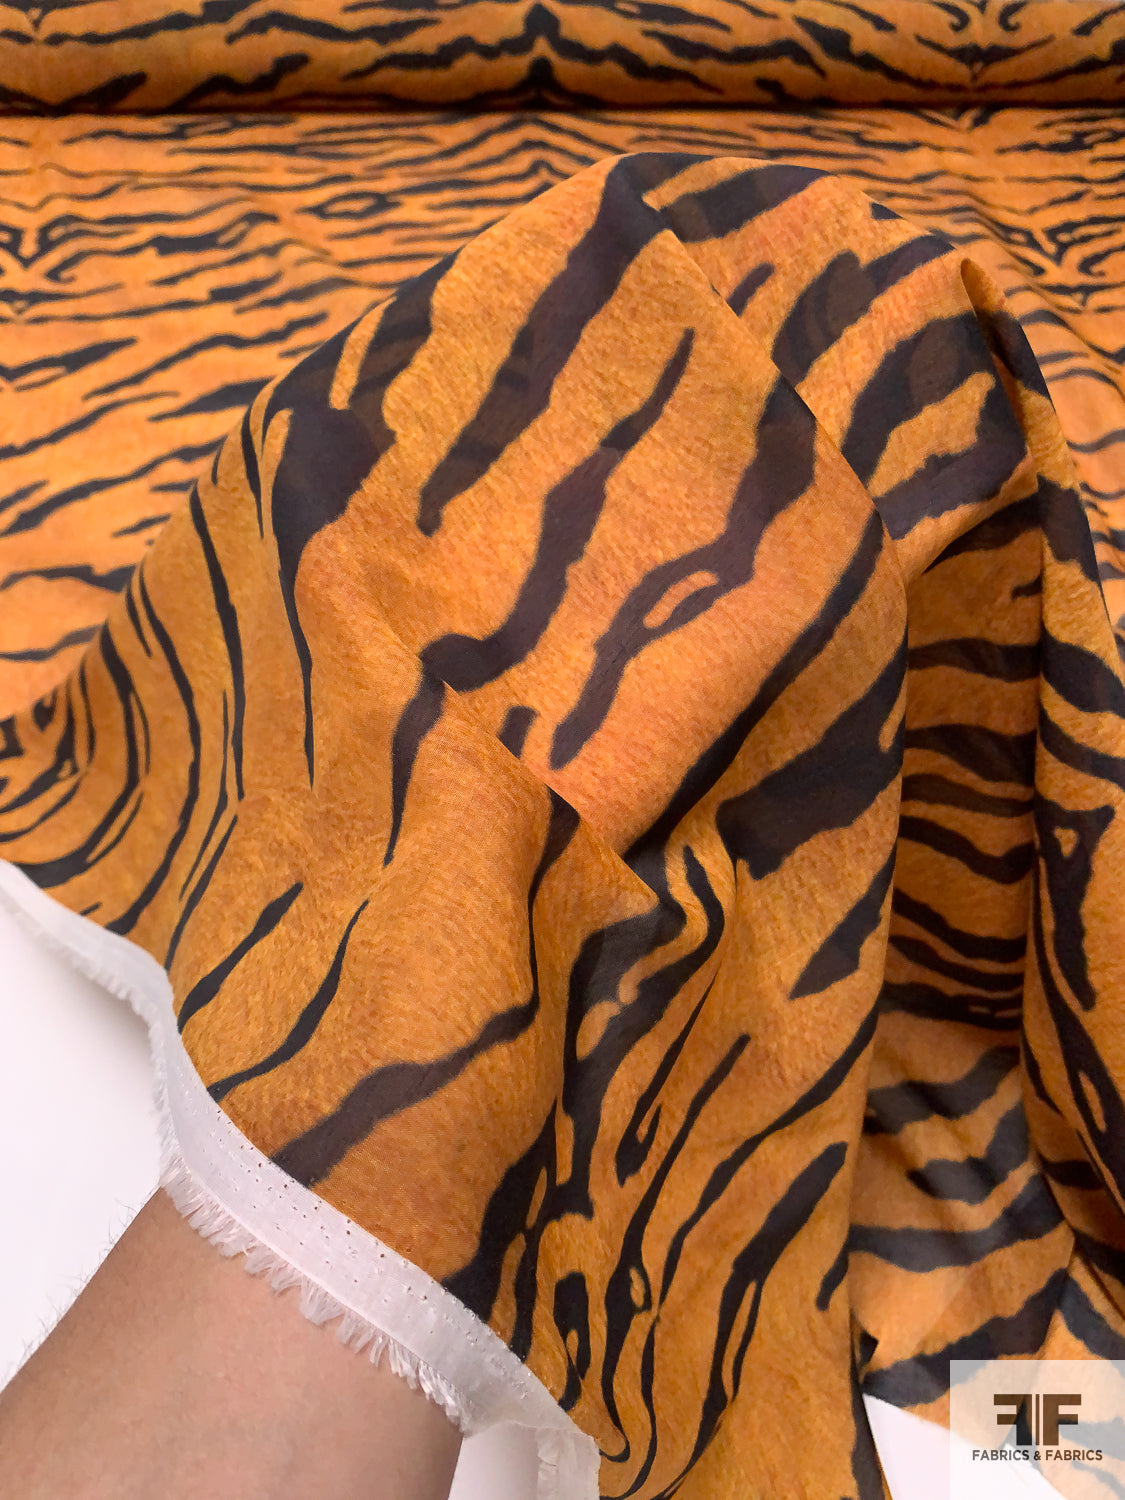 Tiger Pattern Printed Polyester Voile-Chiffon - Golden Caramel / Black